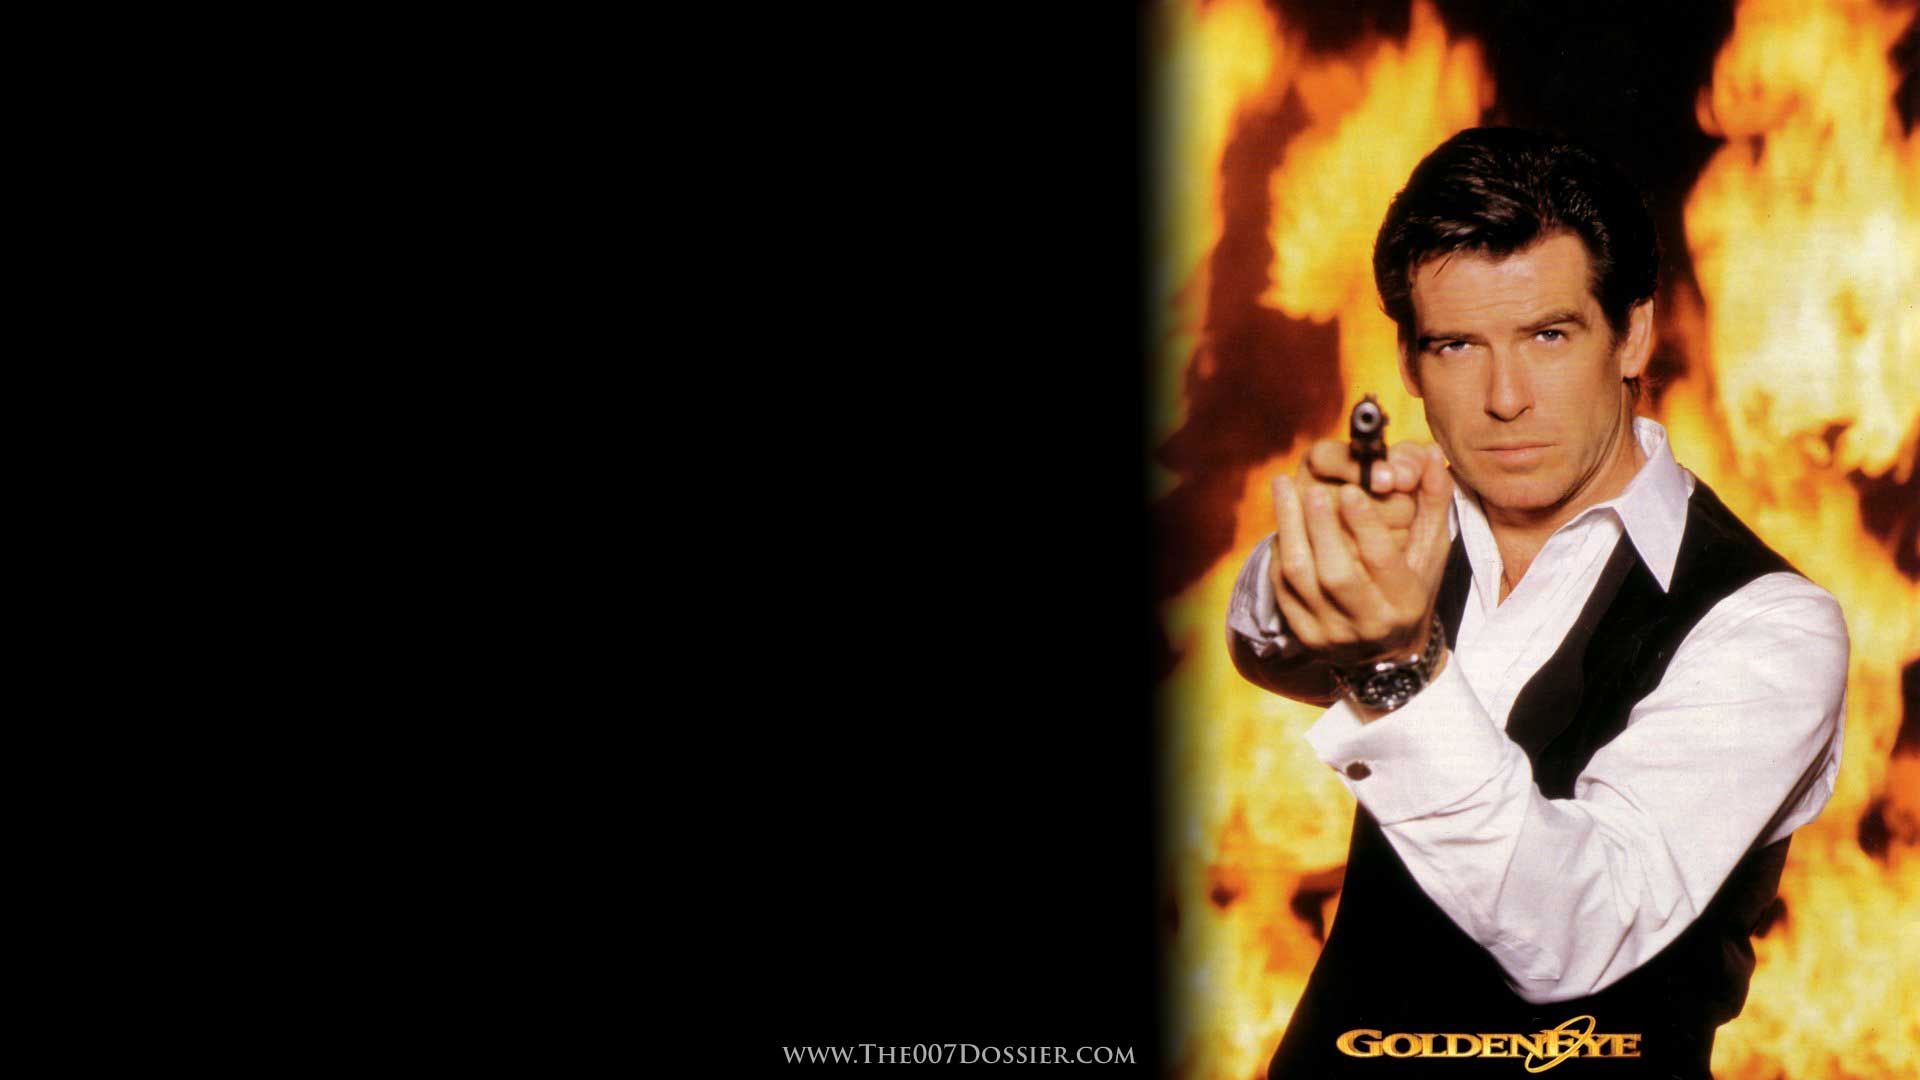 Goldeneye Pierce Brosnan James Bond